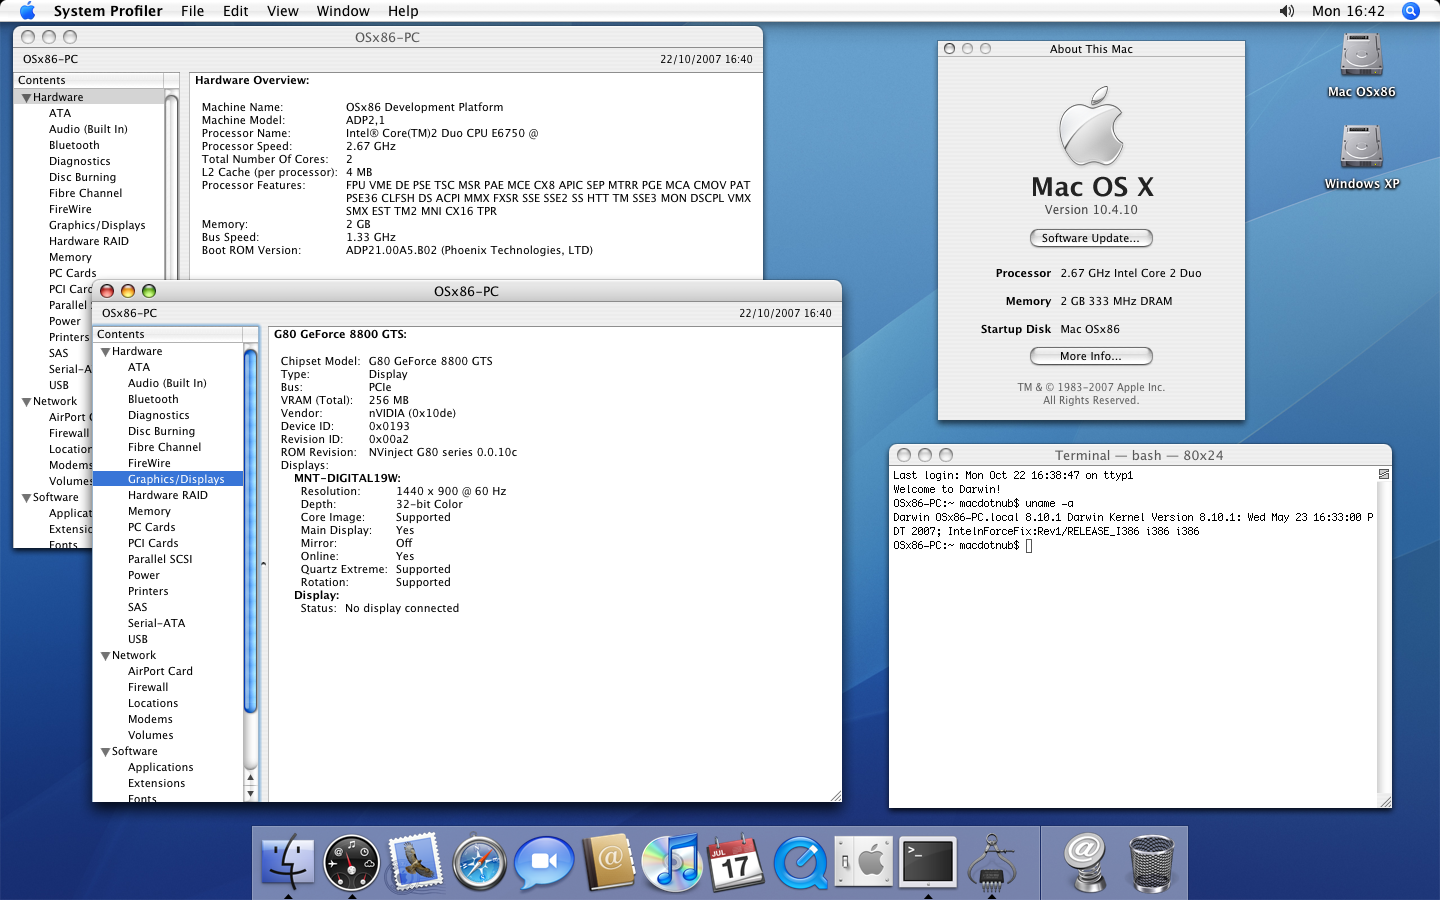 clean my mac x torrent download